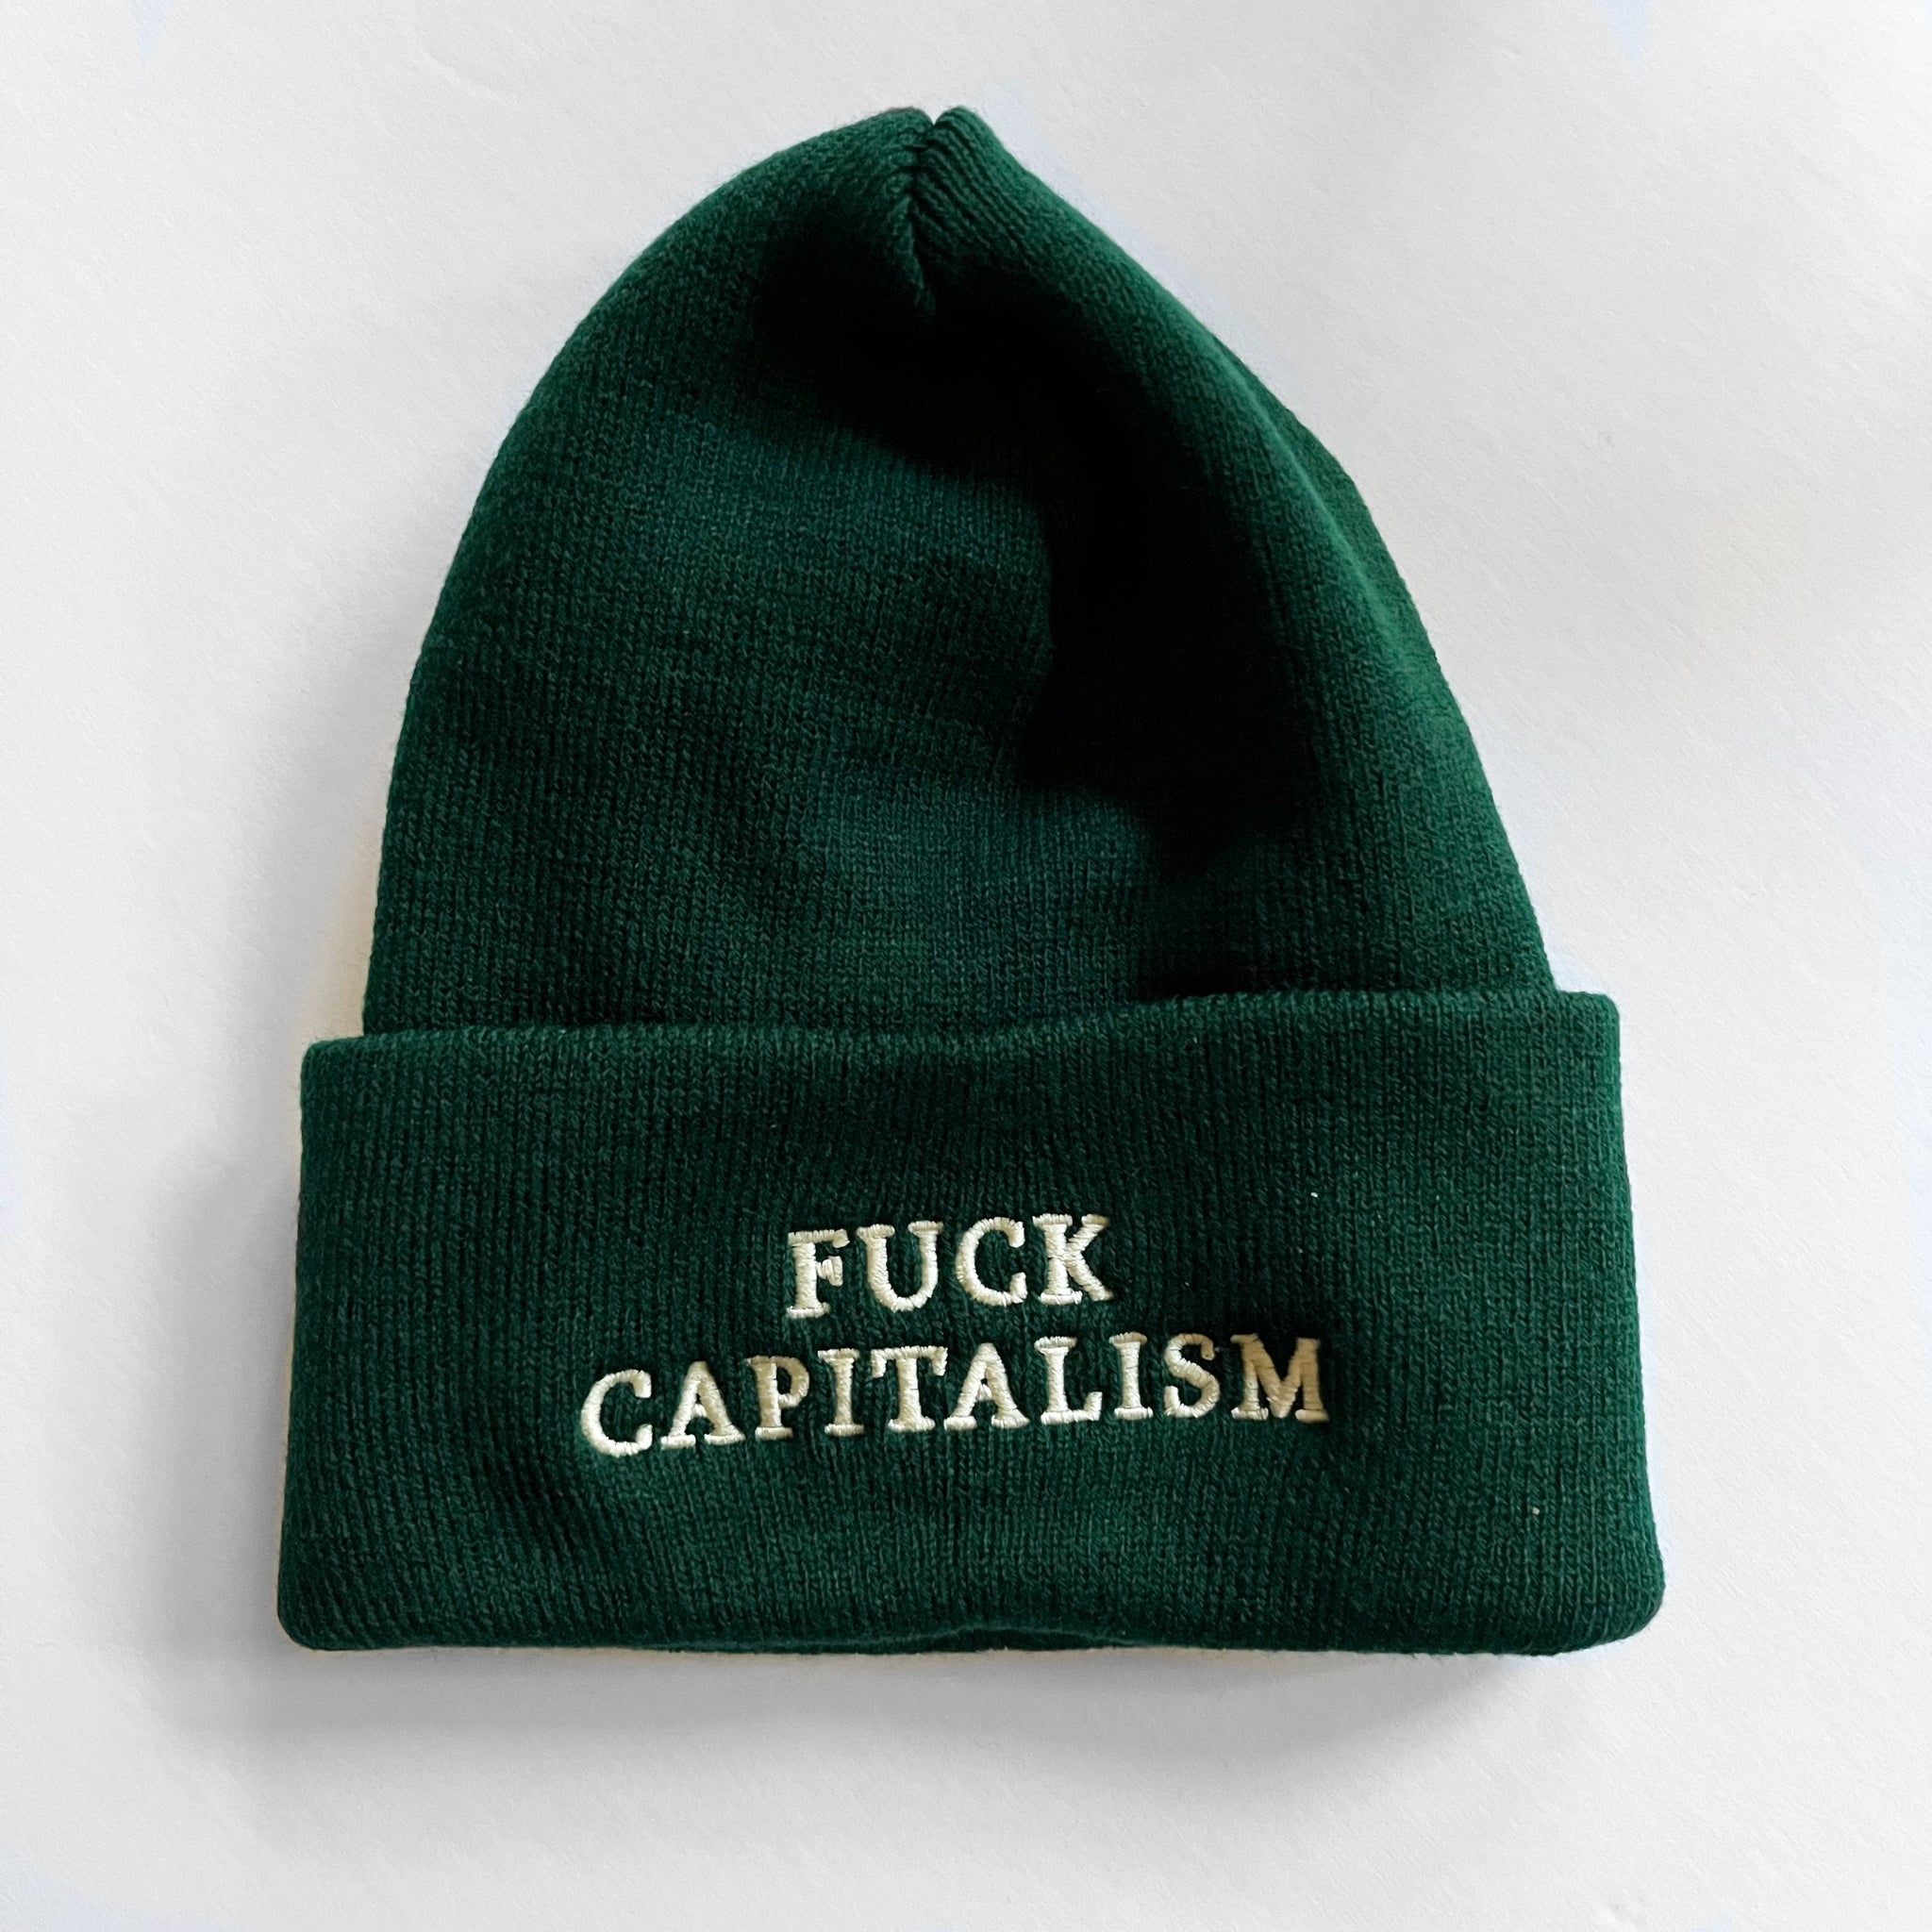 Fuck Capitalism - Beanie